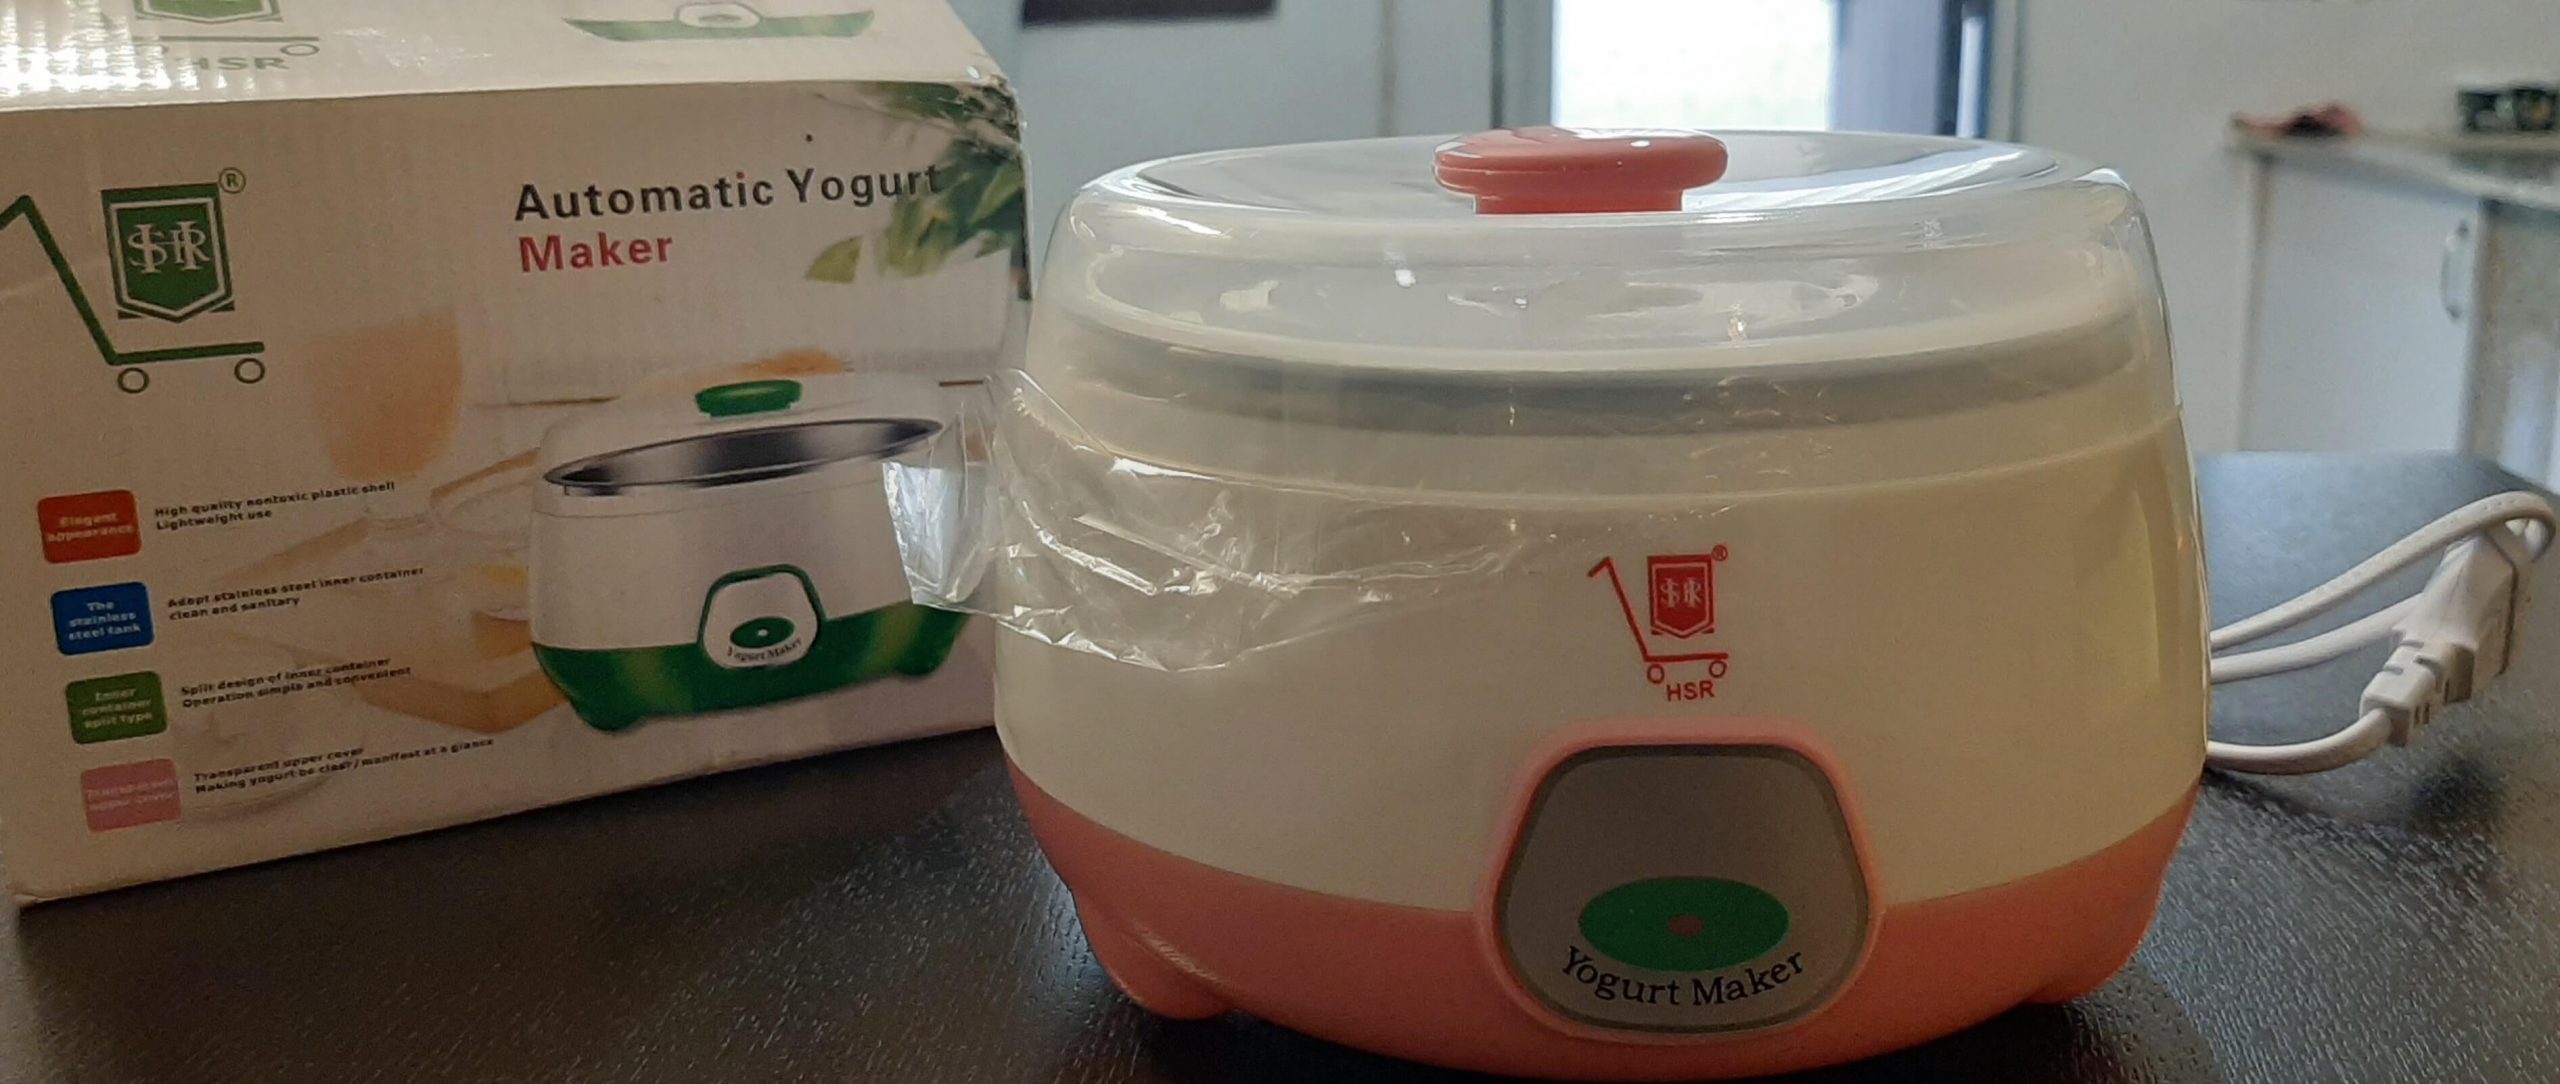 unboxing of hsr automatic yogurt maker review